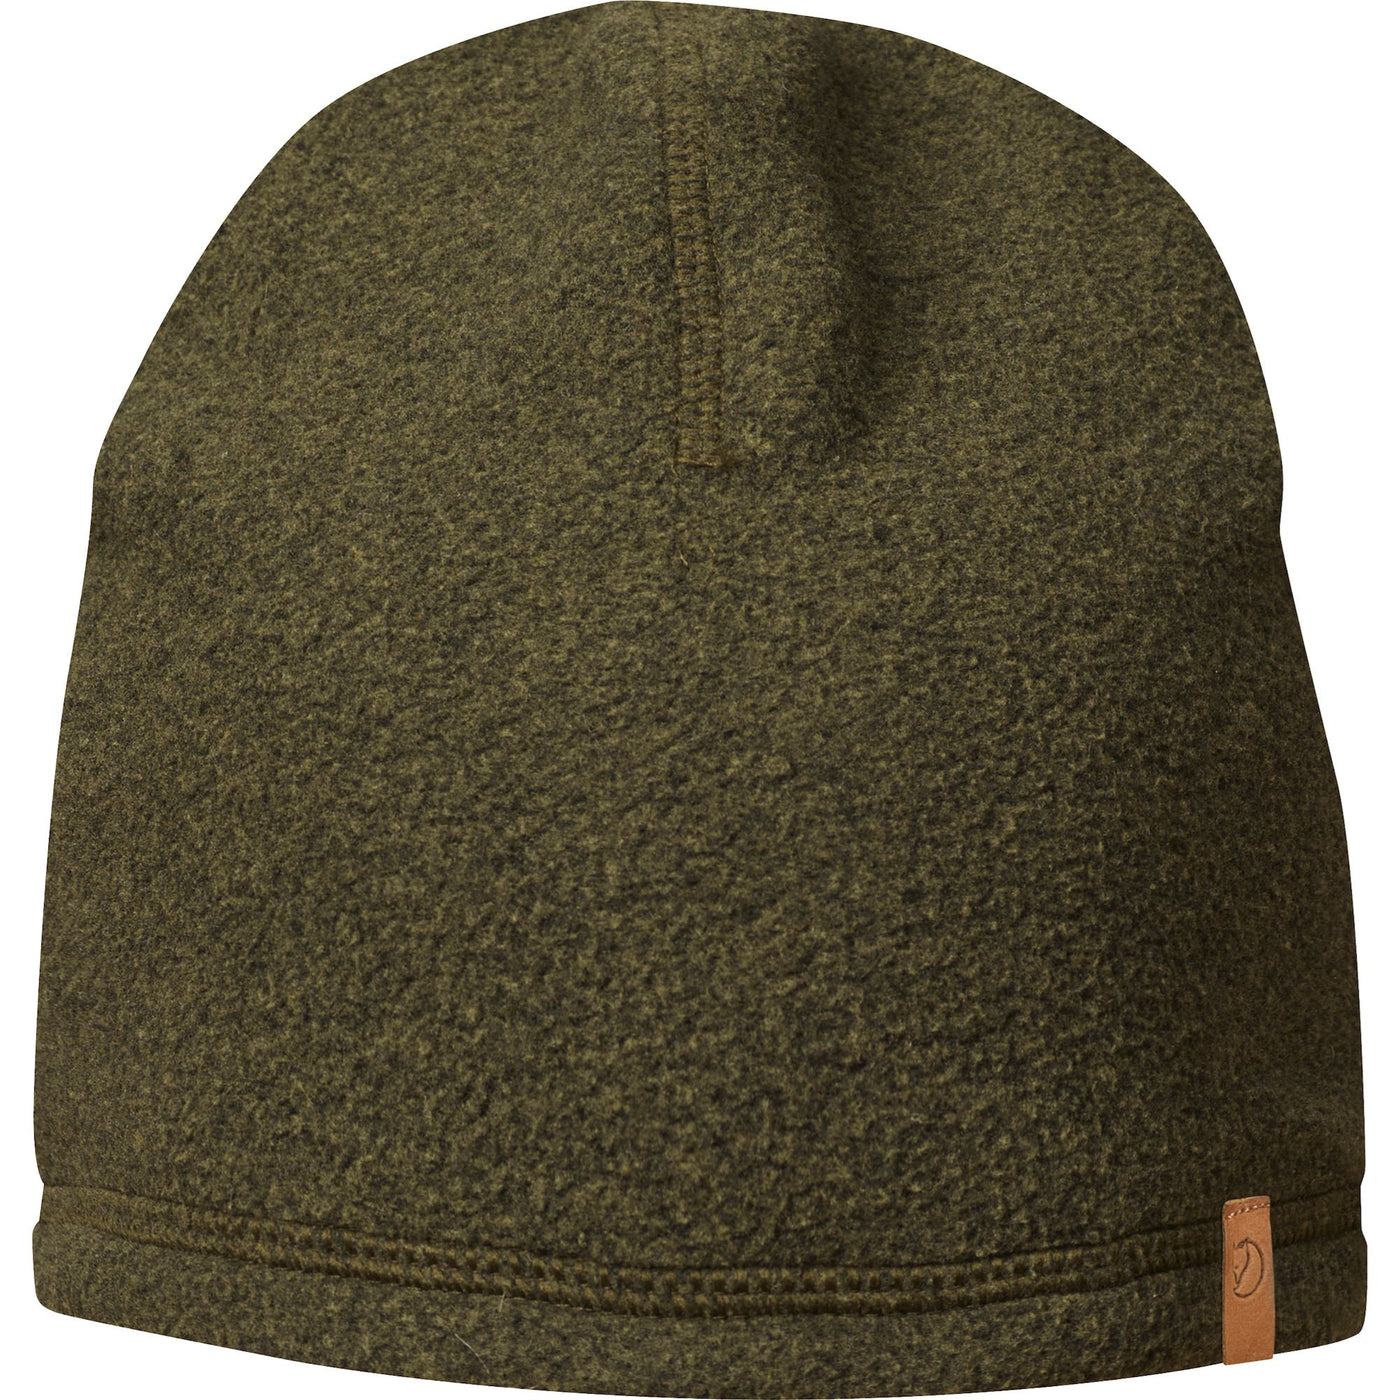 Lappland fleece hat